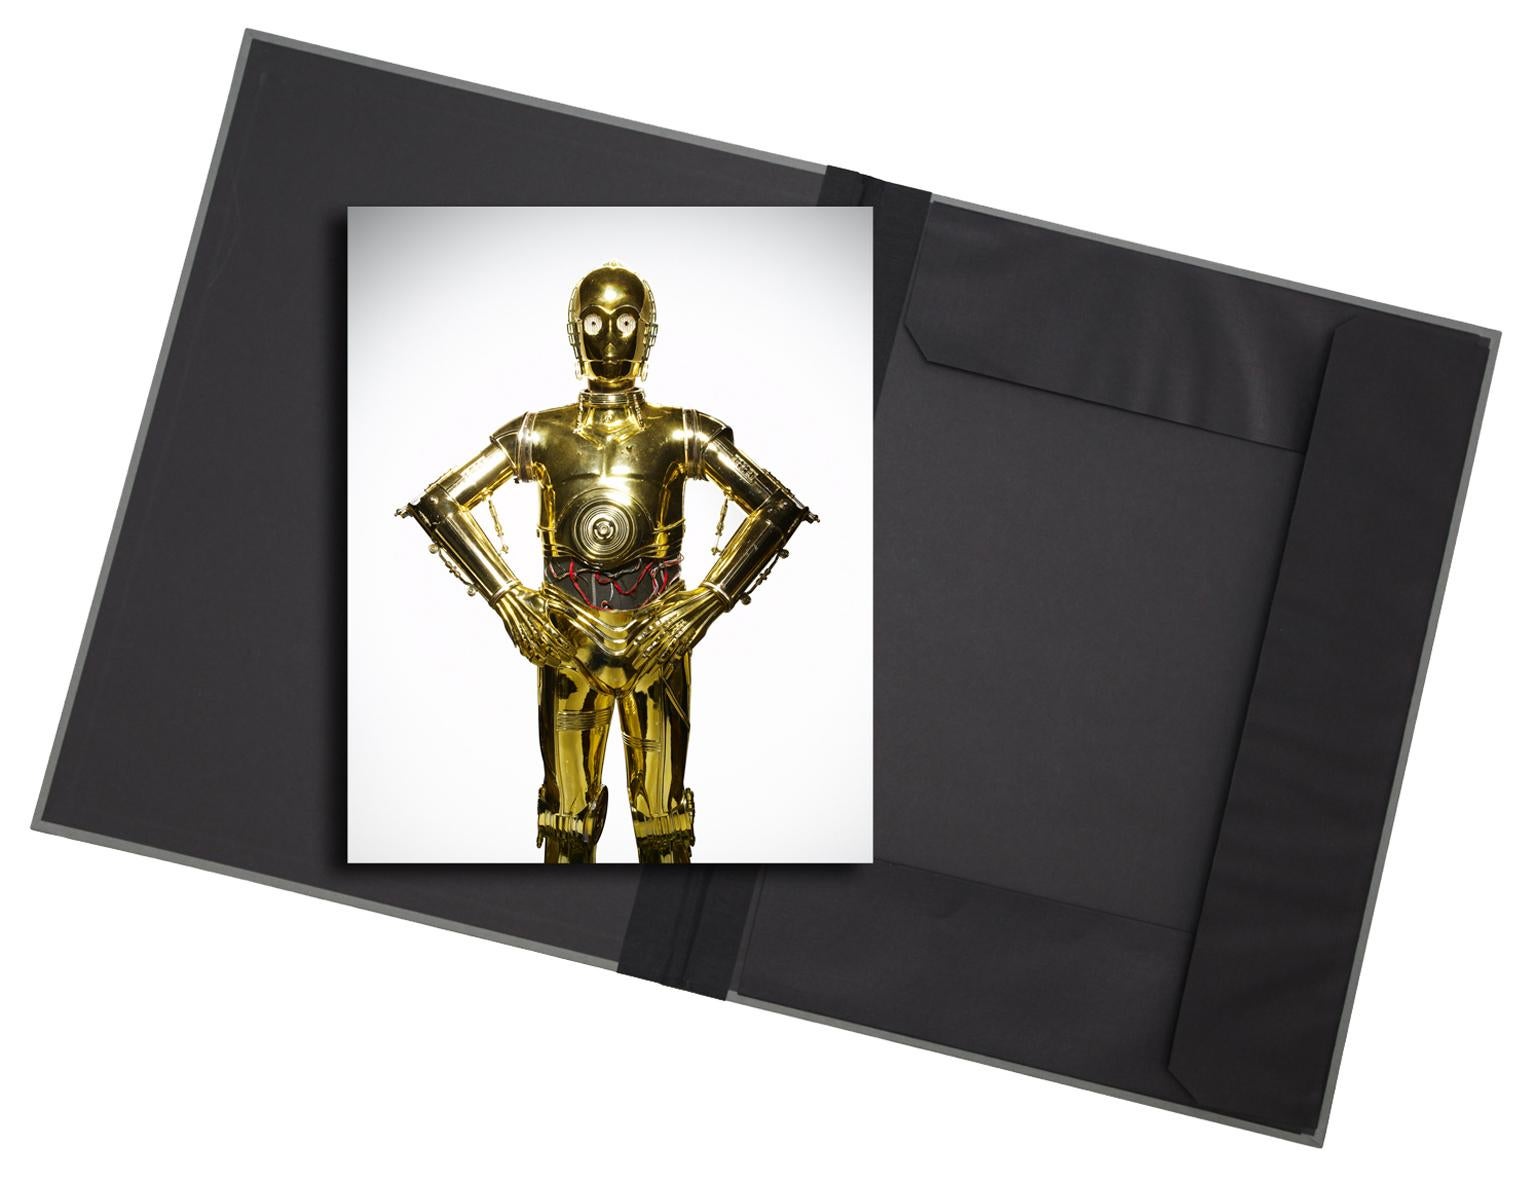 Tom Schierlitz Still-Life Print - Star Wars (C-3PO) - photograph in classic archival artwork portfolio gift binder